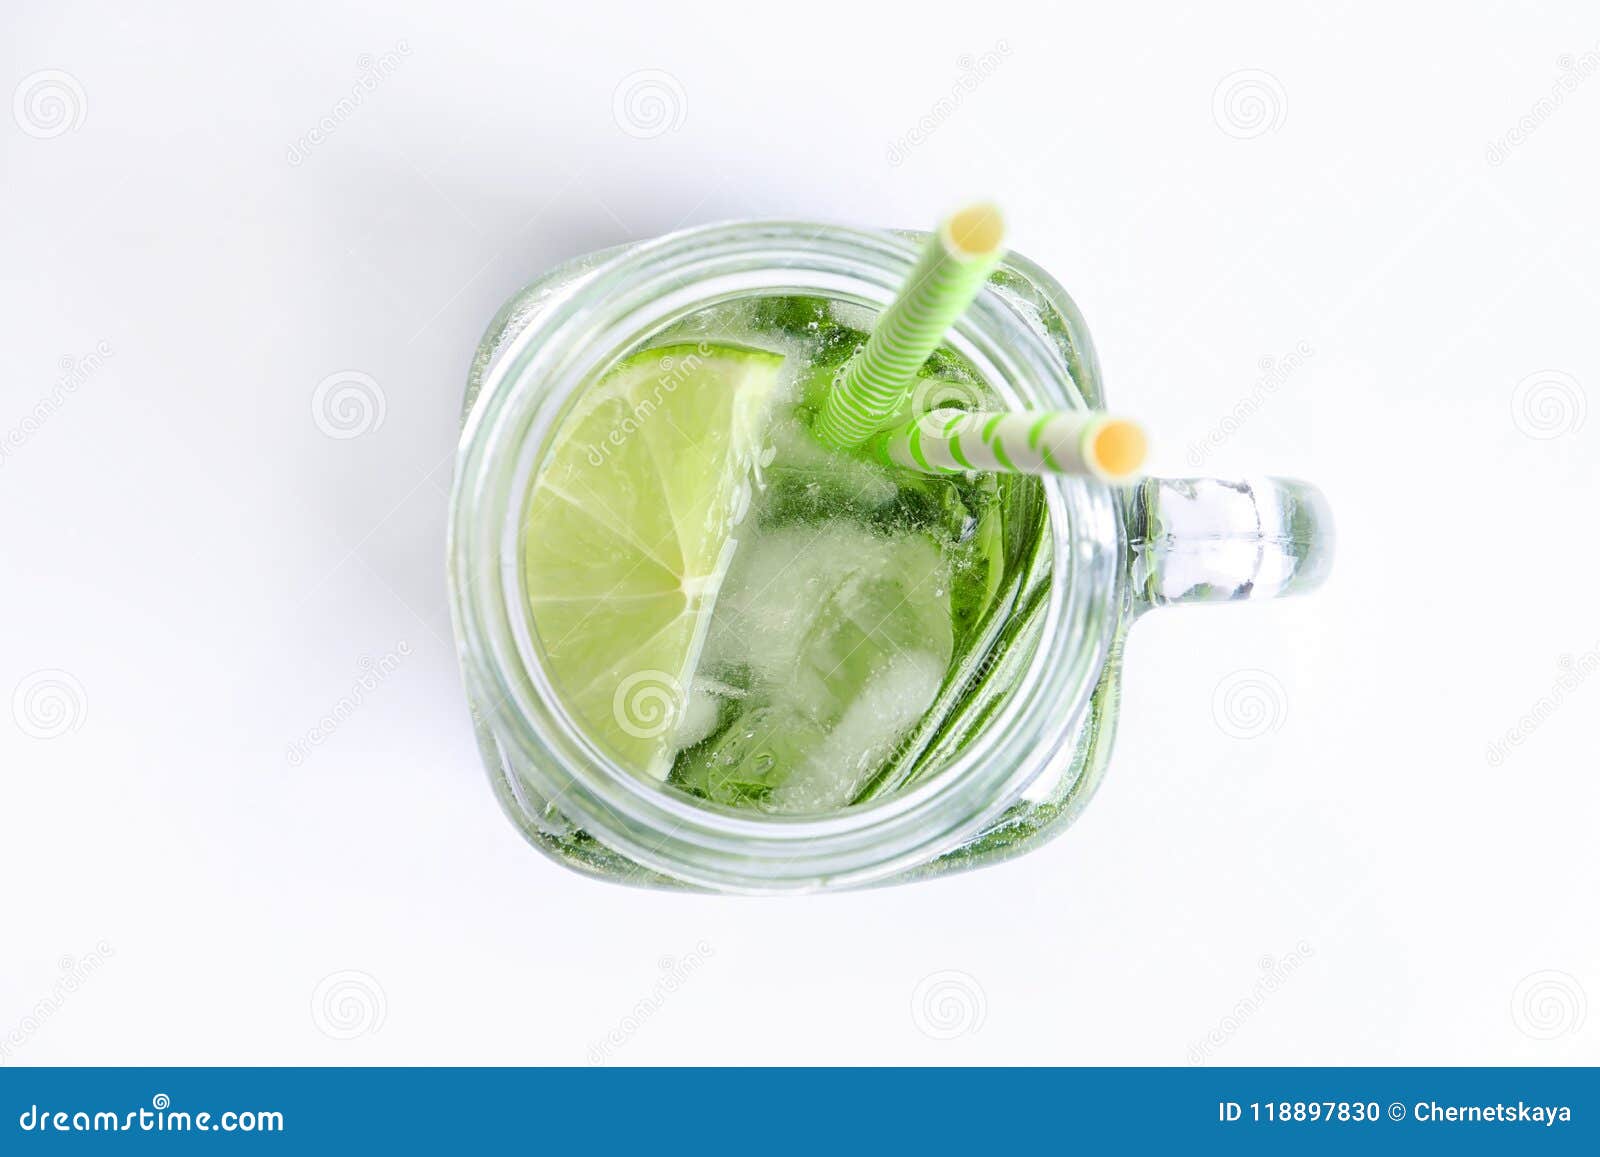 https://thumbs.dreamstime.com/z/natural-lemonade-mason-jar-white-background-top-view-natural-lemonade-cucumber-lime-rosemary-mason-jar-white-118897830.jpg